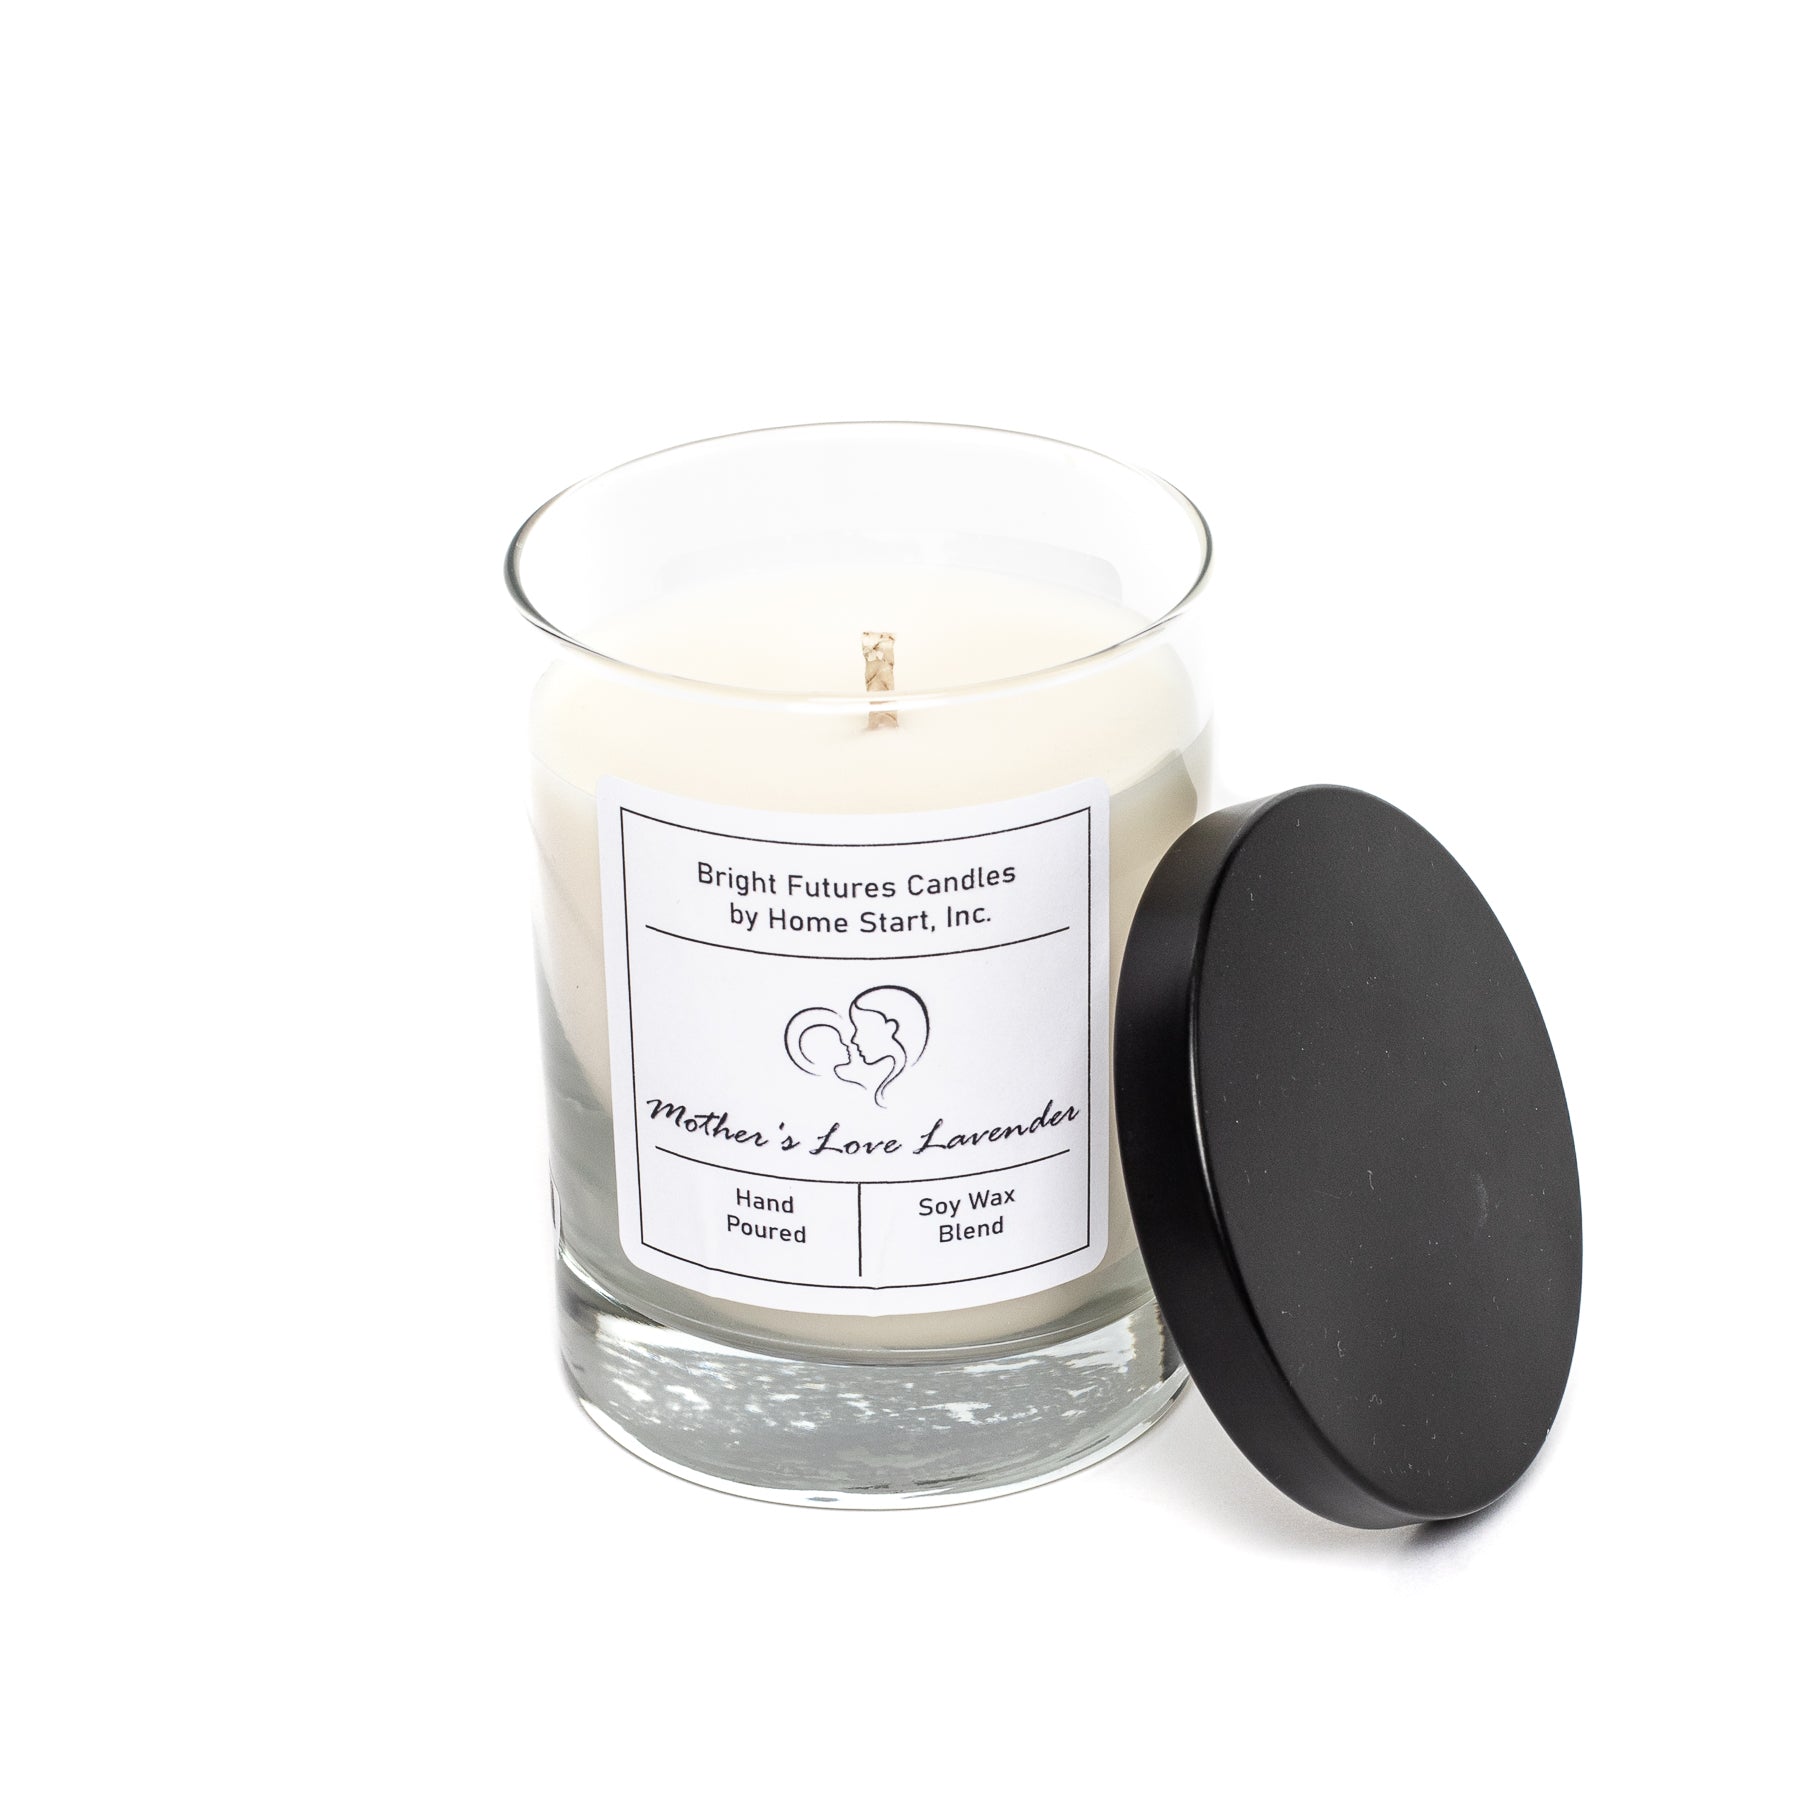 Lavender Bergamot Hand Poured Candle – Little Flower Soap Co